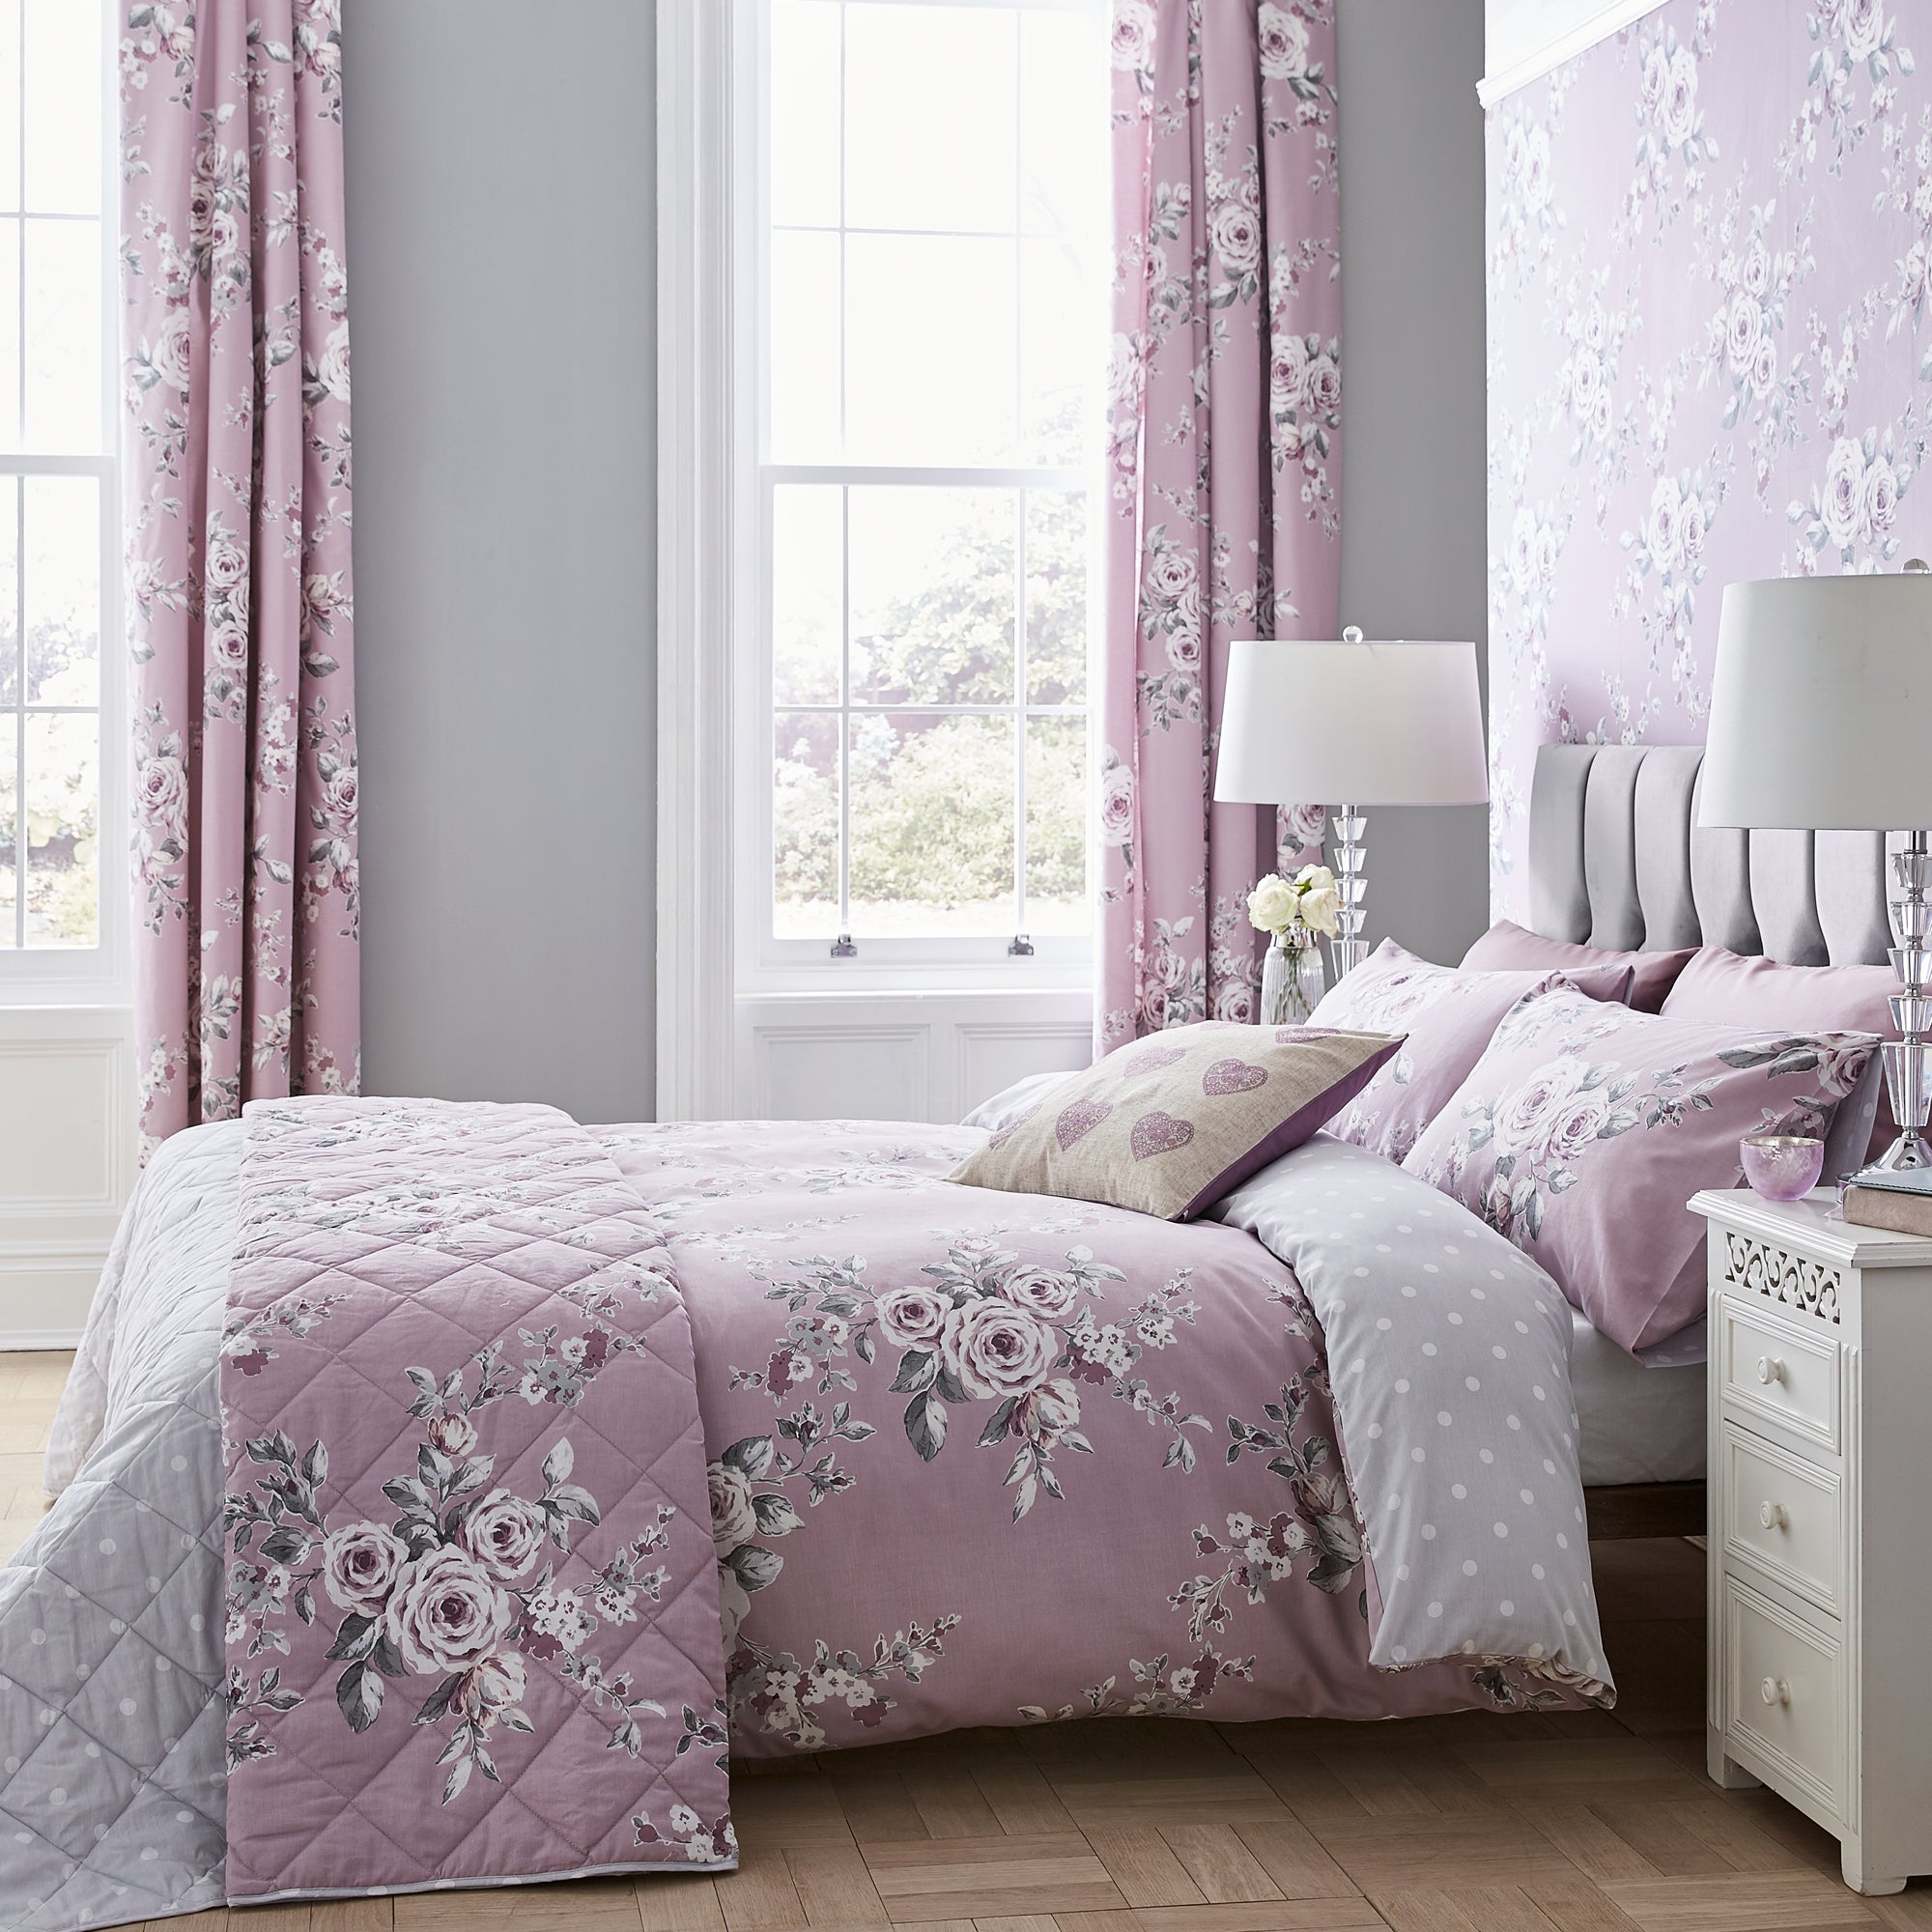 Photos - Bed Catherine Lansfield Canterbury Bedspread purple 